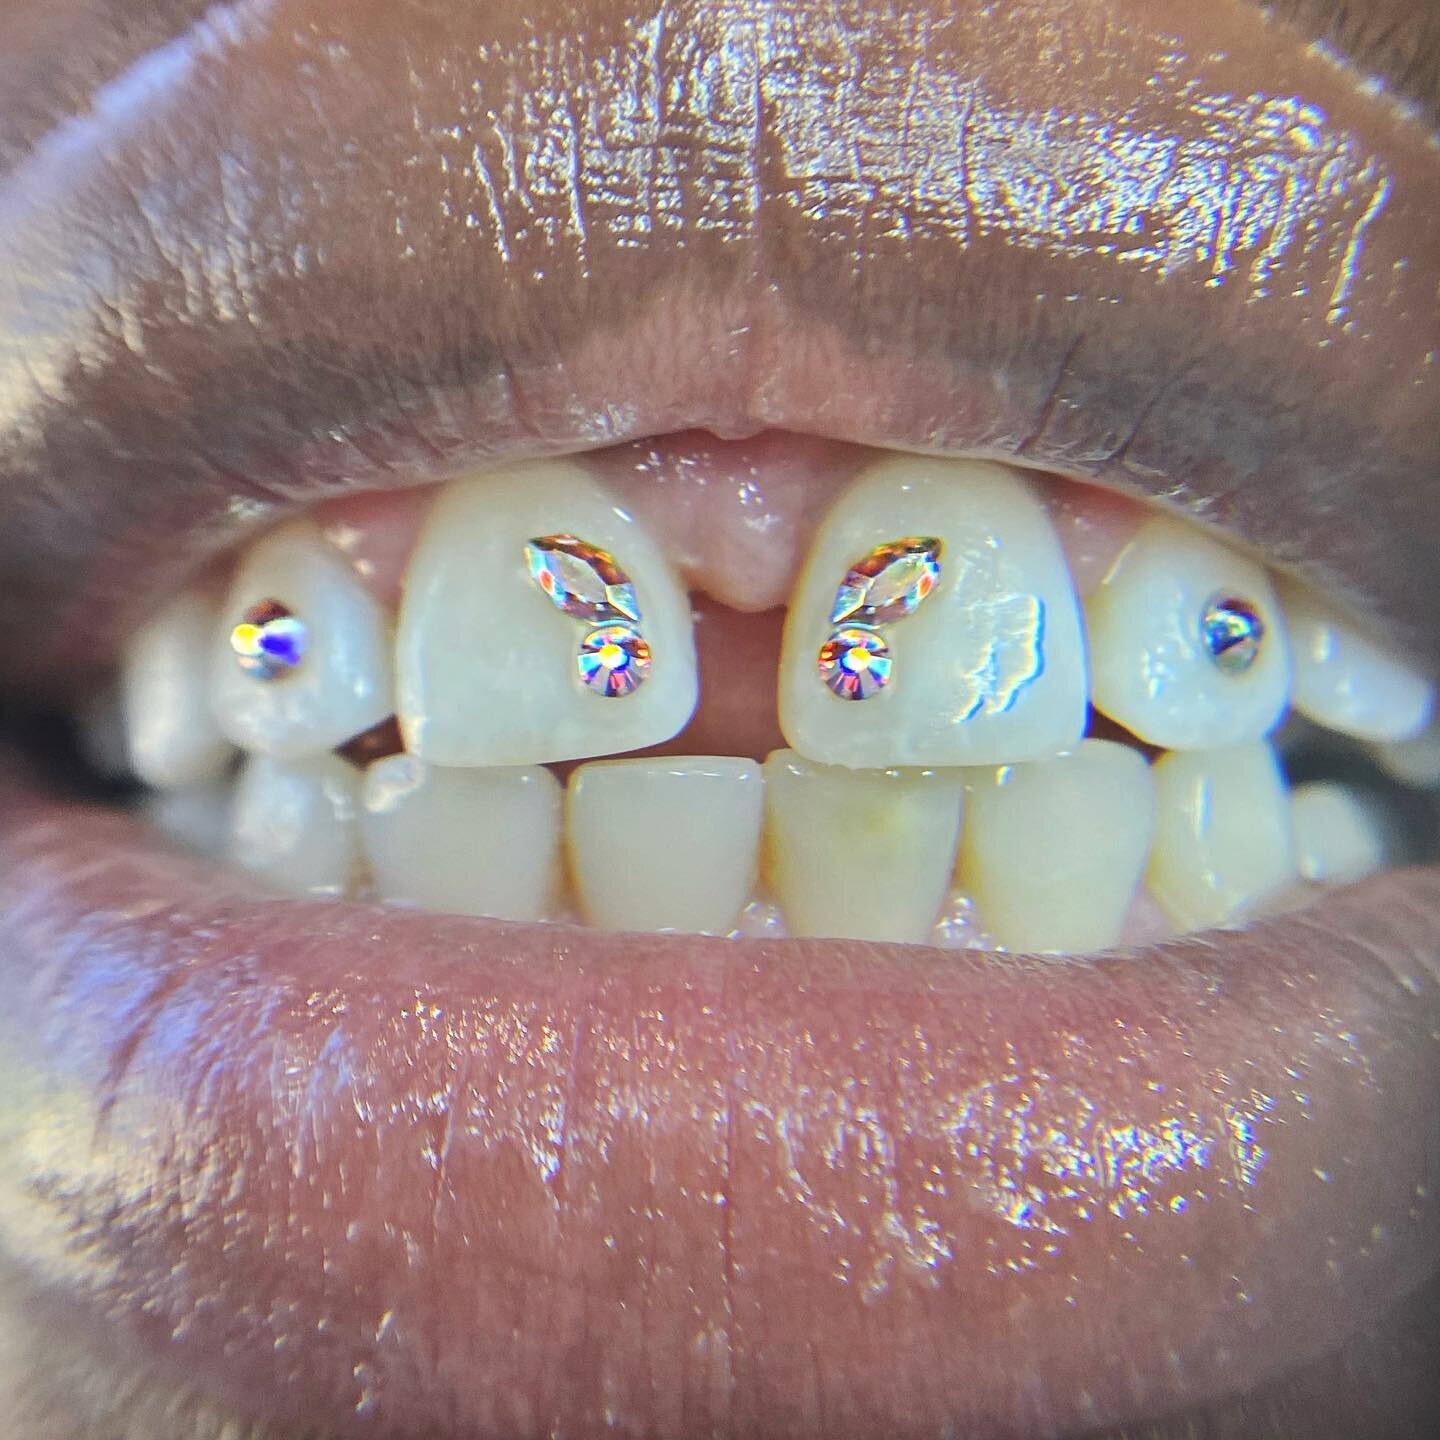 Crystal Butterfly Tooth Gem - SmileGems